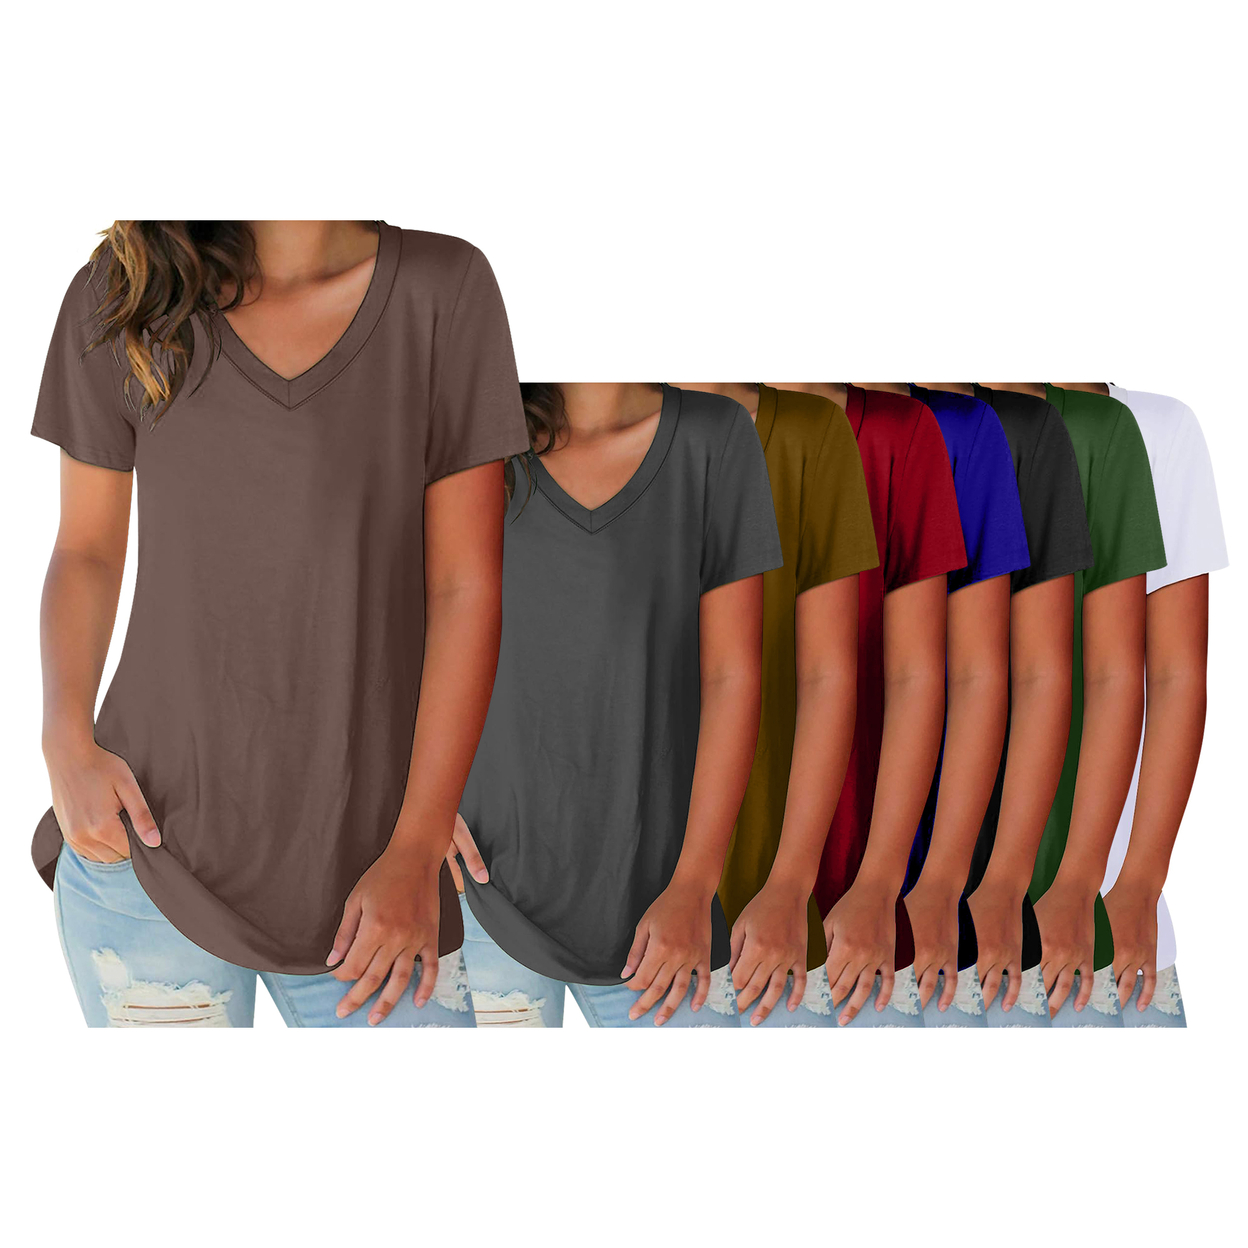 3-Pack: Women's Ultra Soft Smooth Cotton Blend Basic V-Neck Short Sleeve Shirts - Black, Navy, Grey, Large